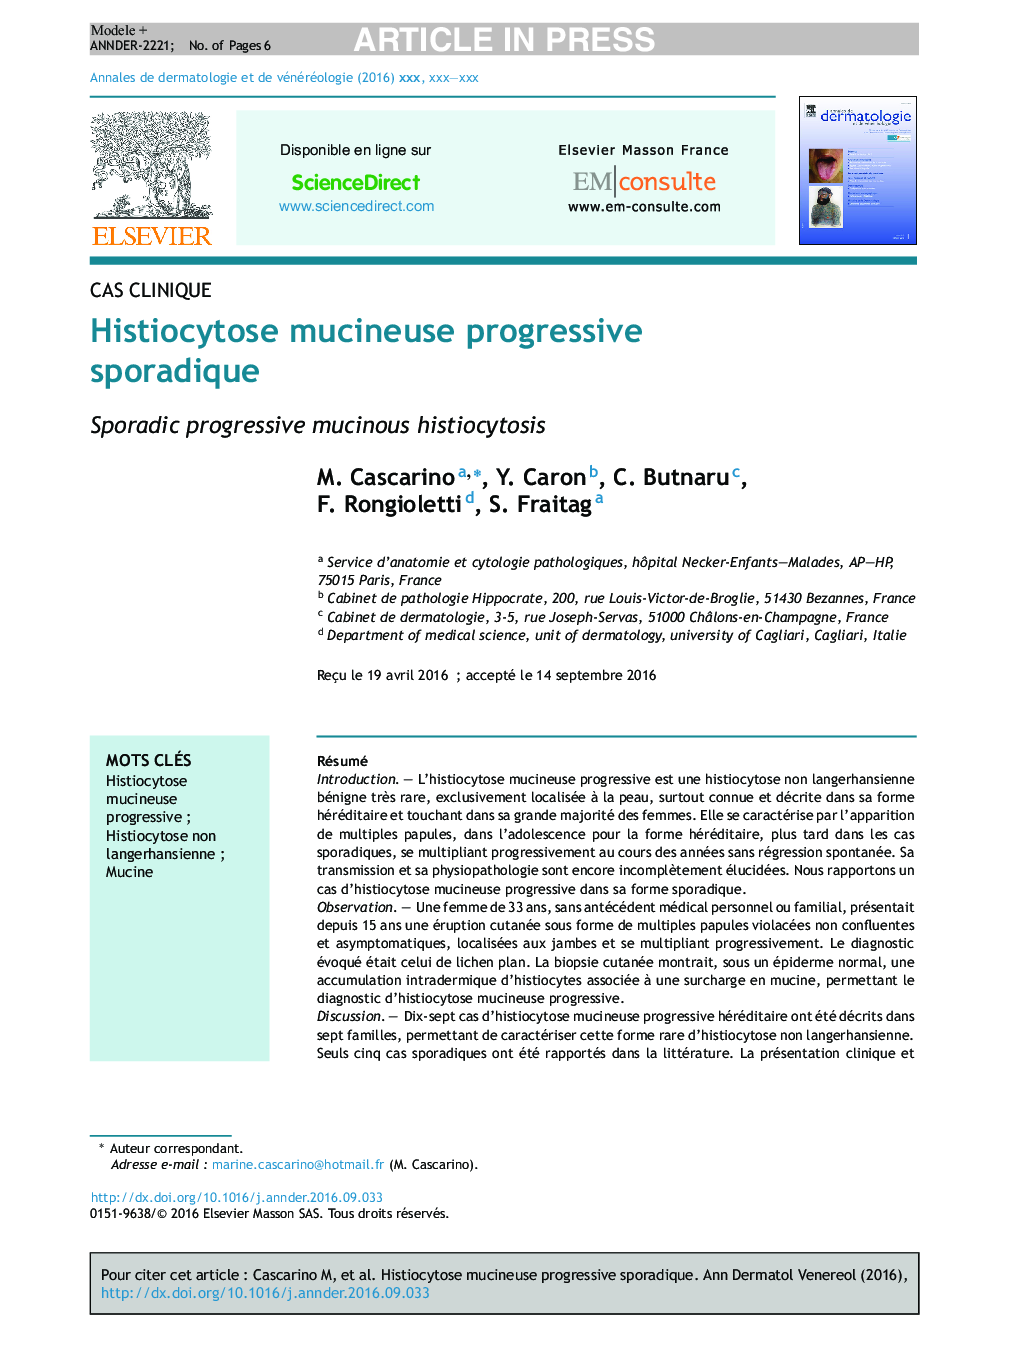 Histiocytose mucineuse progressive sporadique